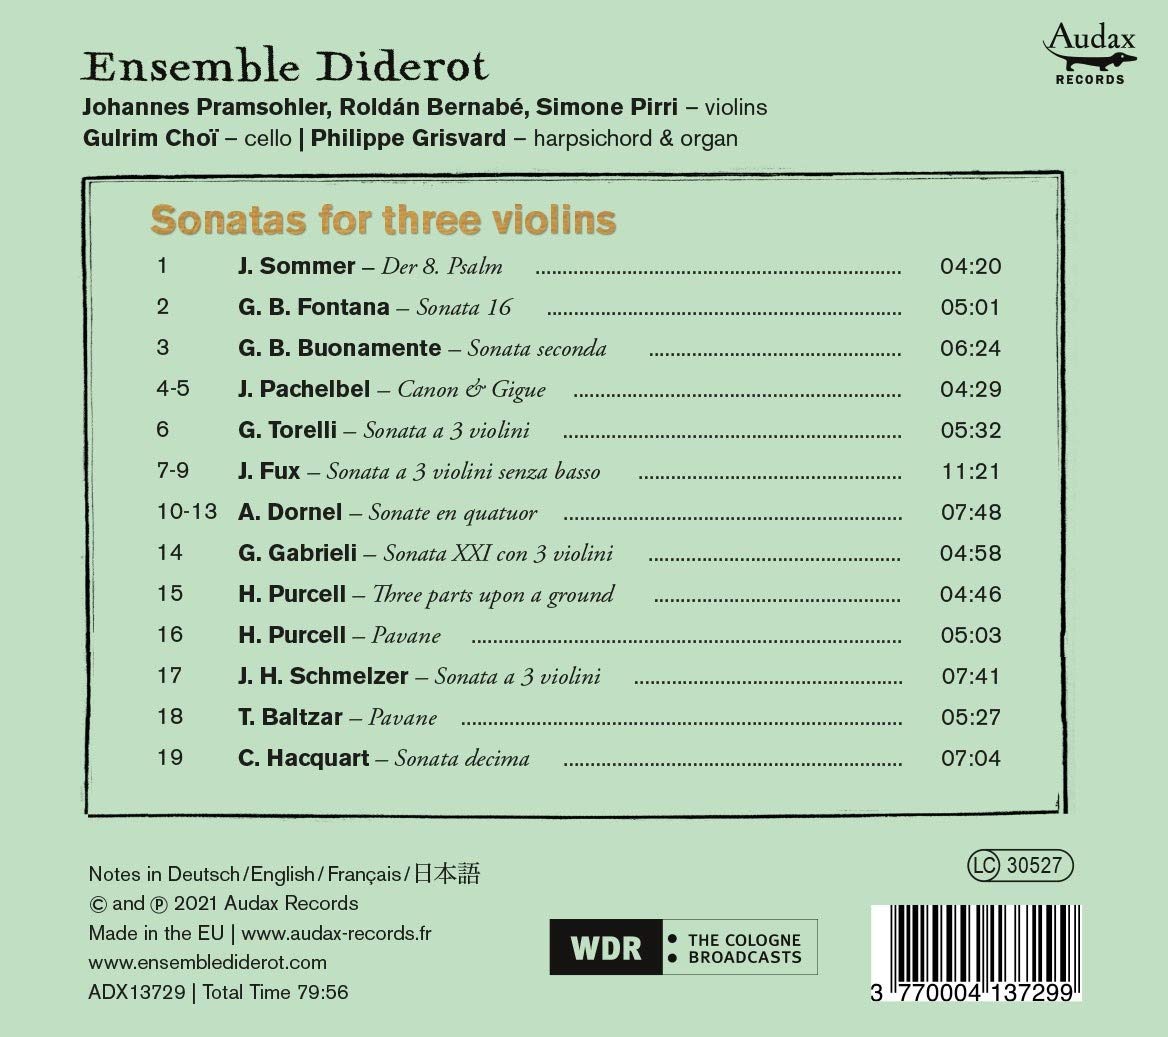 Ensemble Diderot 3대의 바이올린을 위한 소나타 (Sonatas for three Violins)  